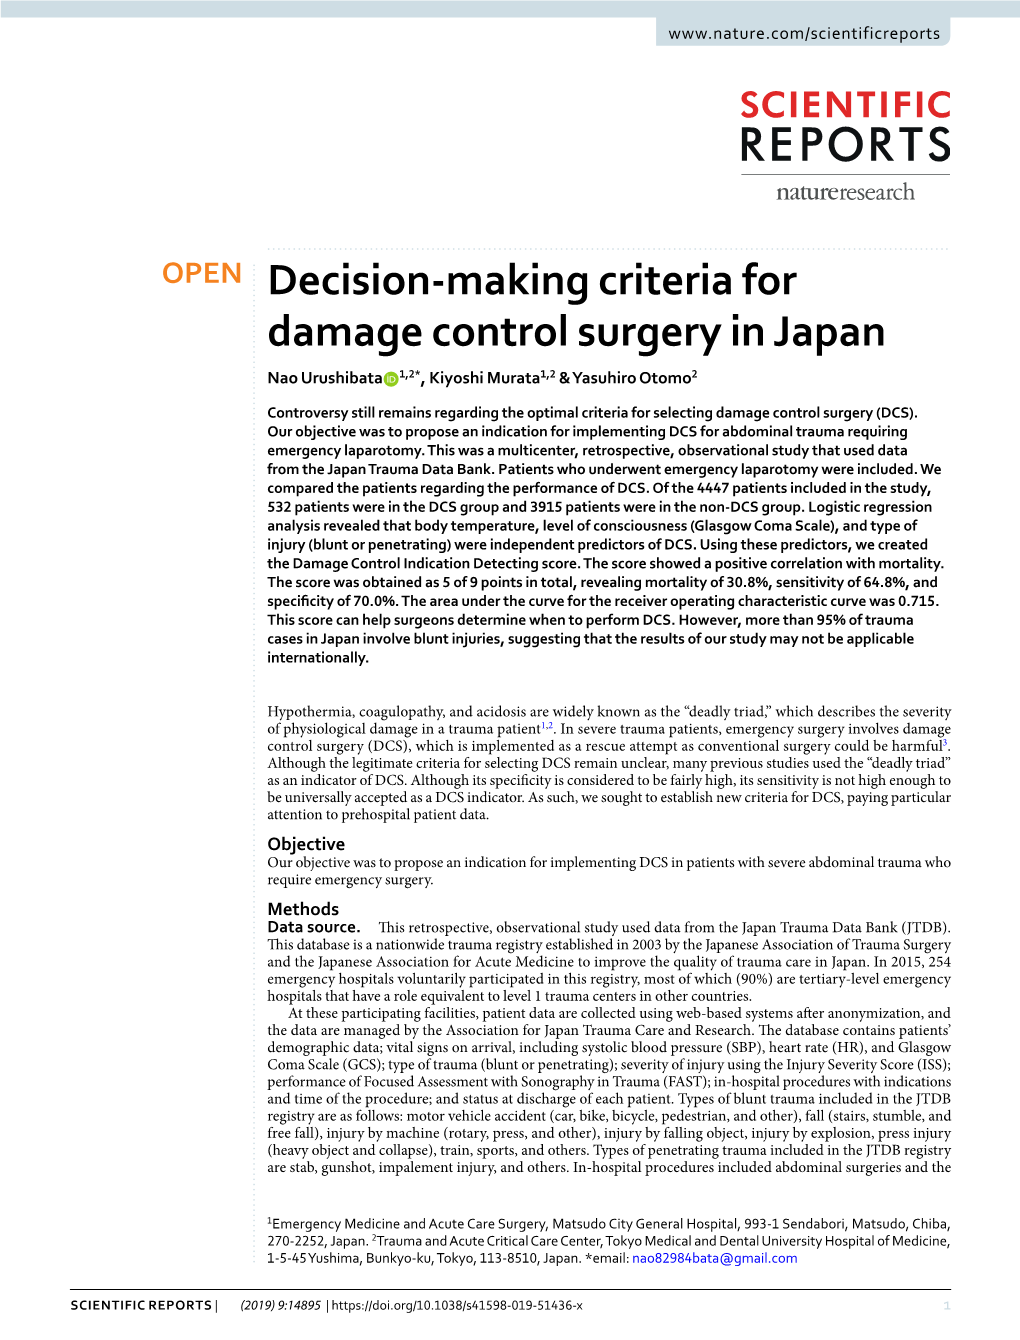 Decision-Making Criteria for Damage Control Surgery in Japan Nao Urushibata 1,2*, Kiyoshi Murata1,2 & Yasuhiro Otomo2